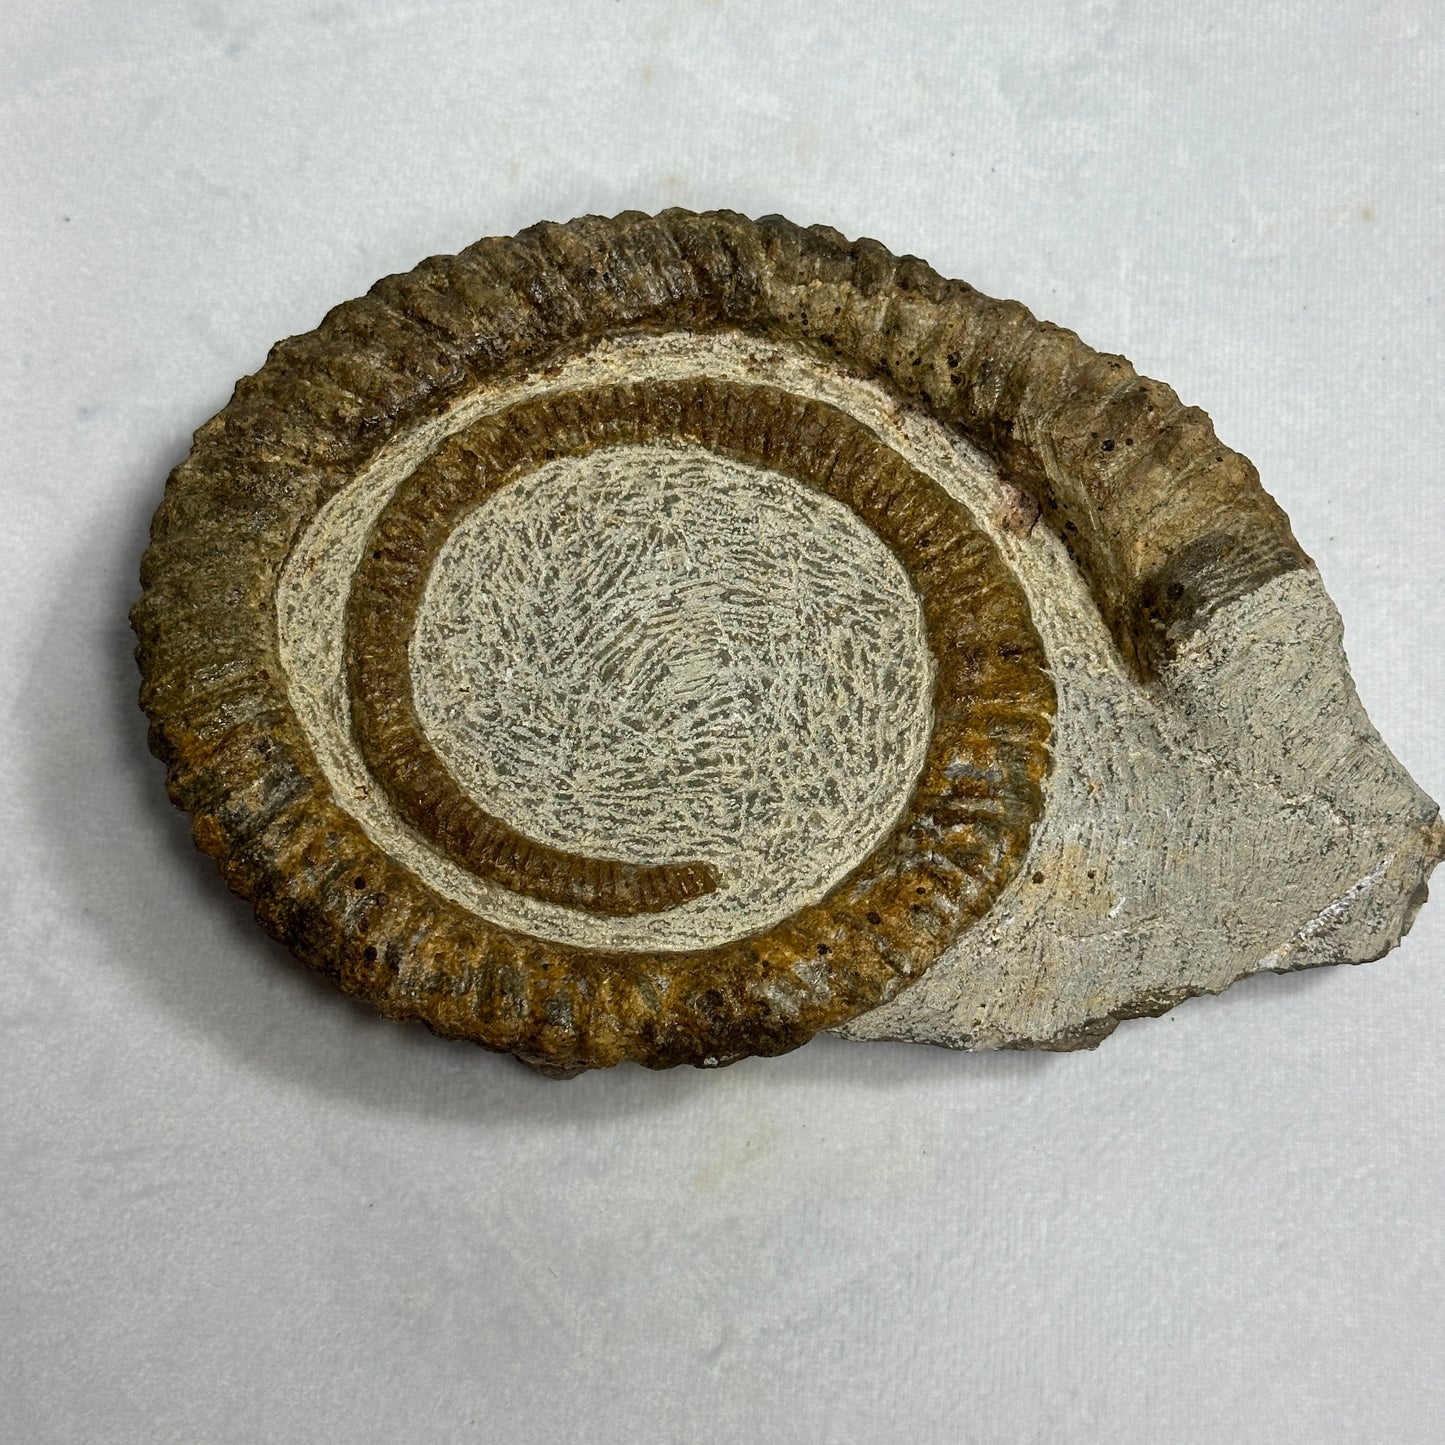 Stunning Display Piece - Anetoceras Heteromorph Ammonite